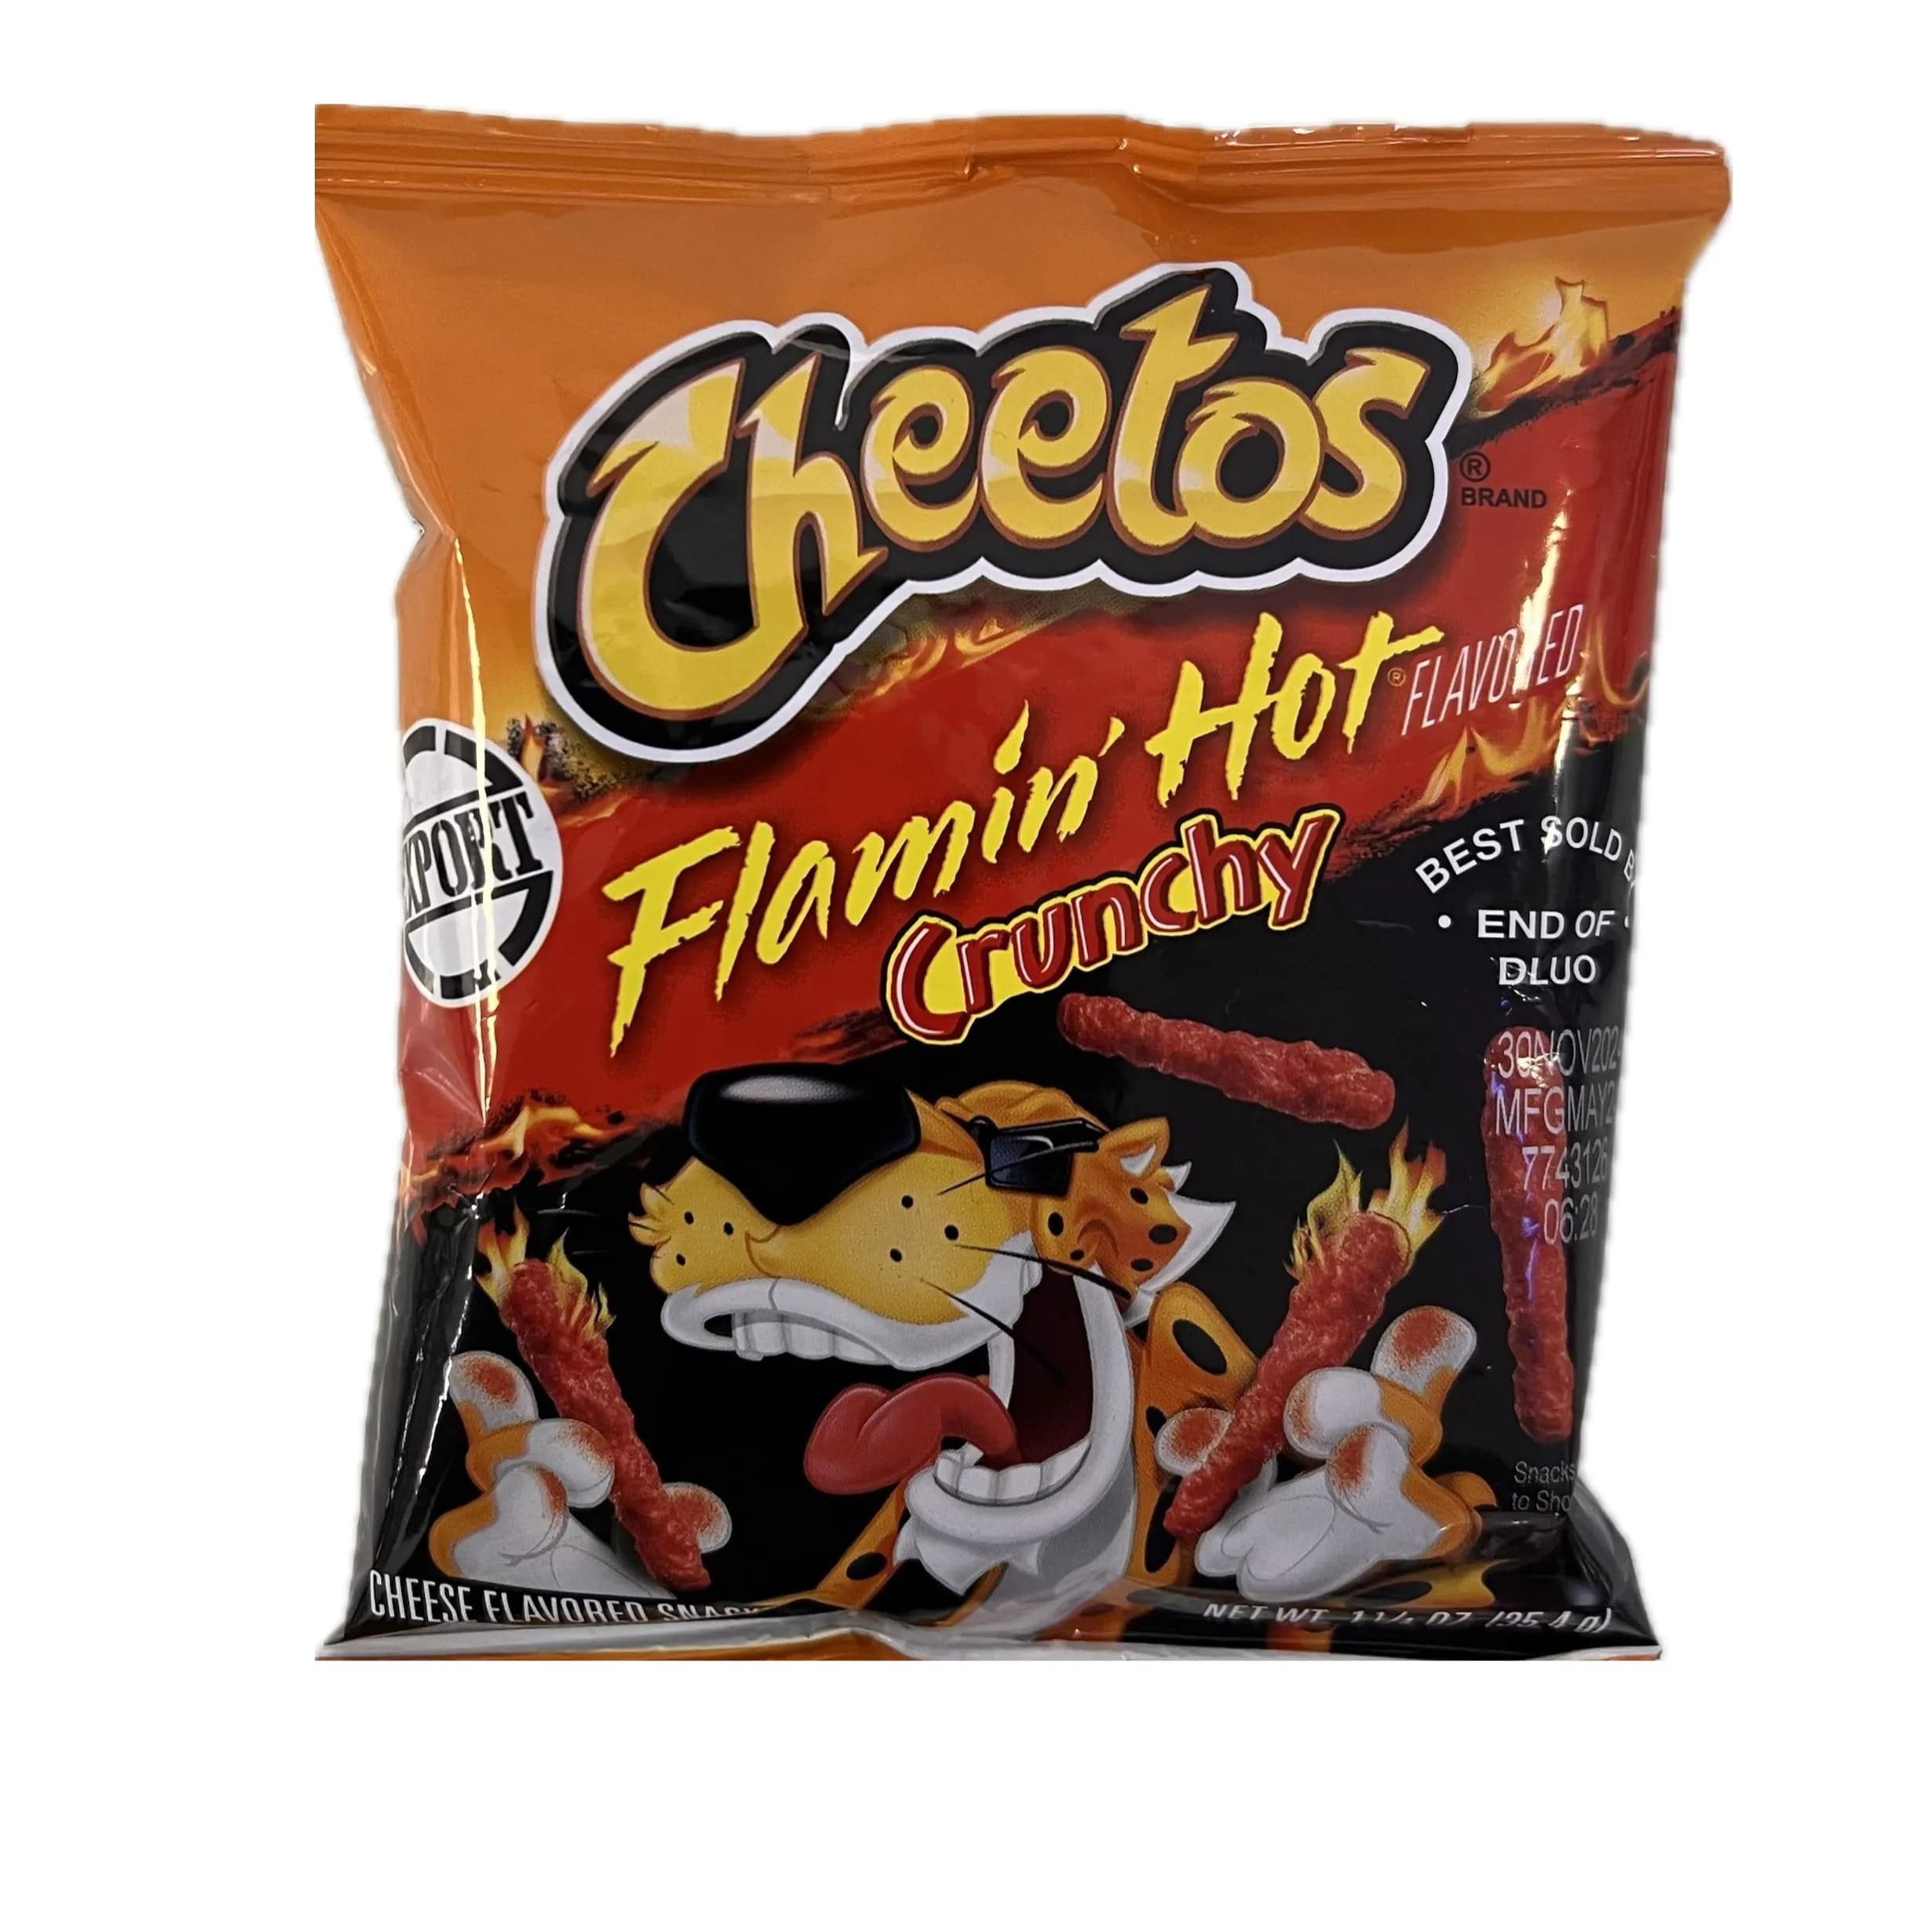 Cheetos Flamin Hot Crunchy 35G Chips